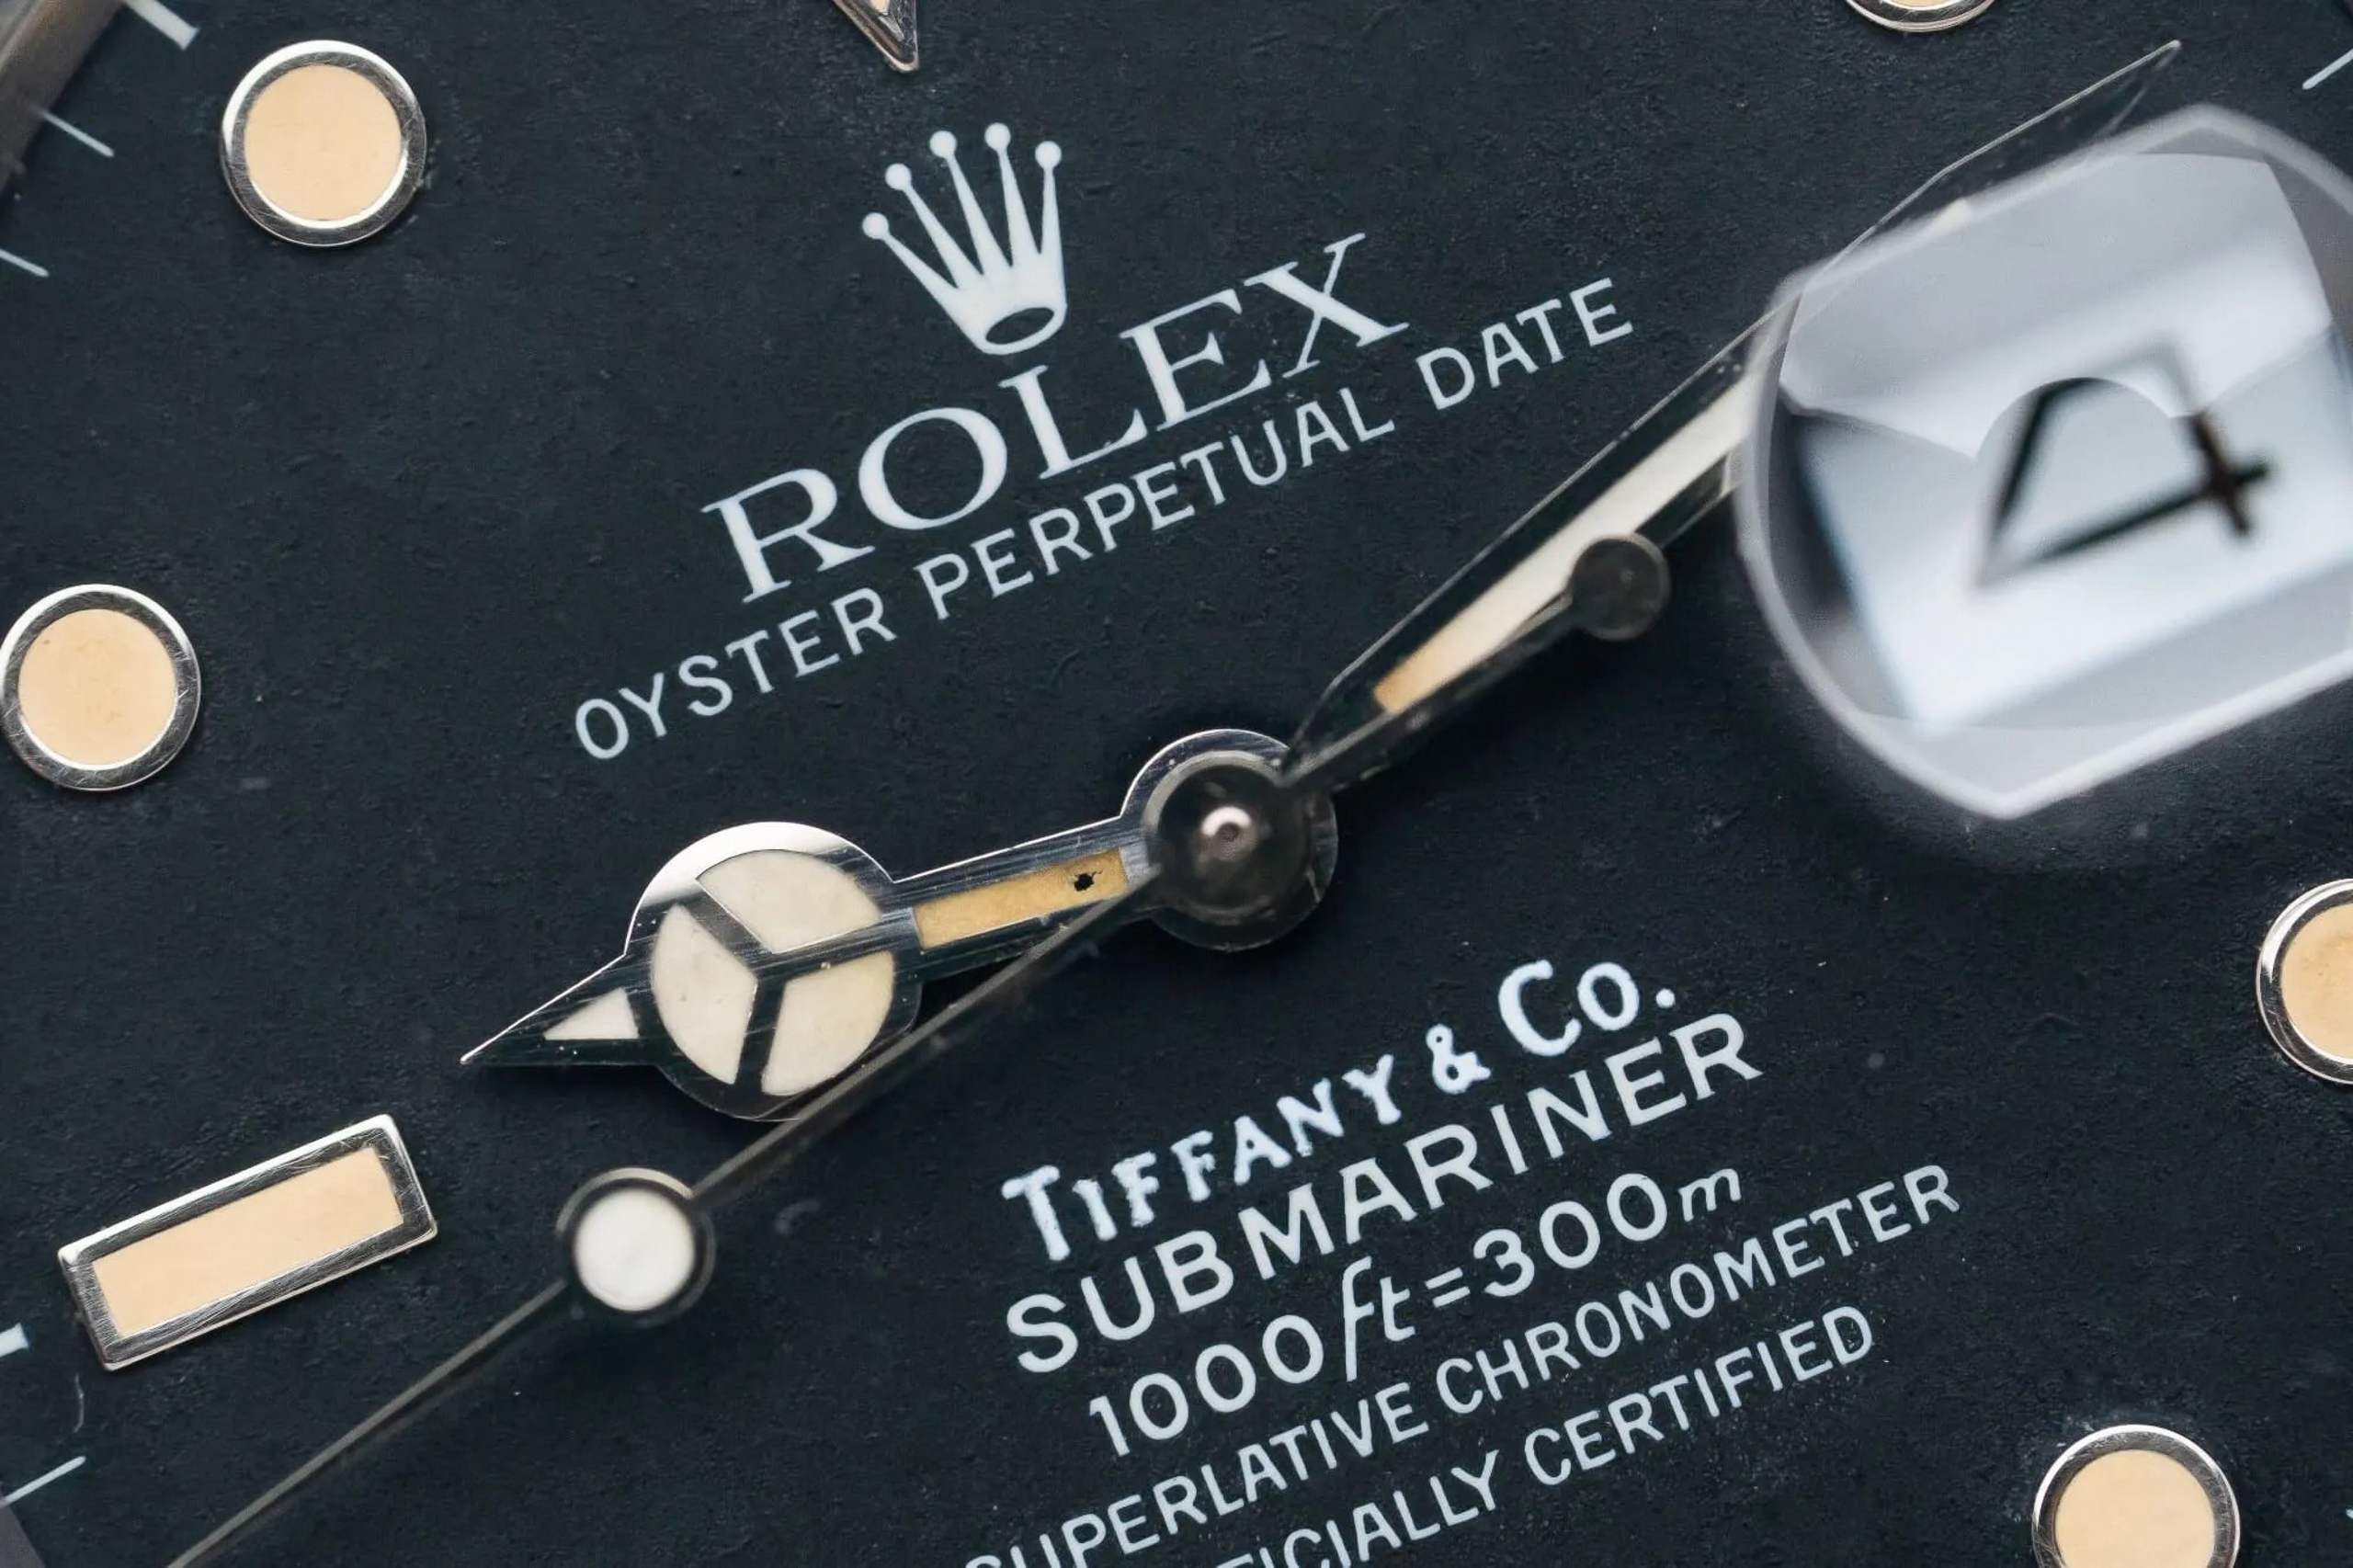 Tiffany-Signed-Rolex-Submariner-16800